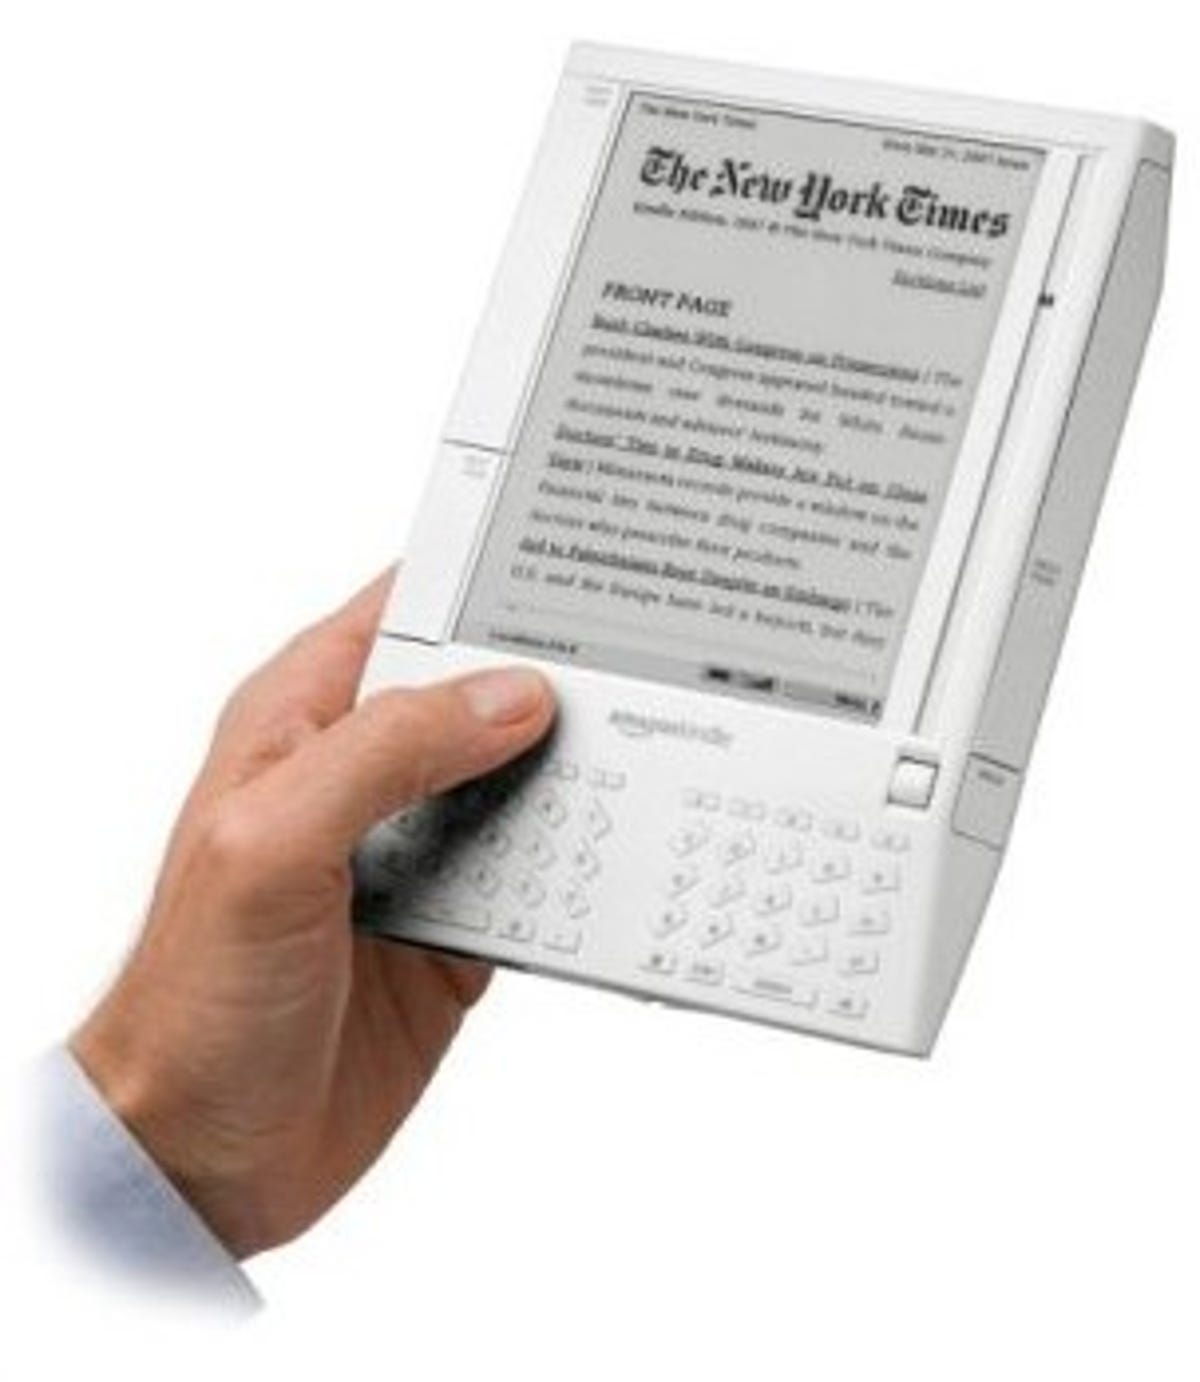 Amazon's Kindle e-book reader